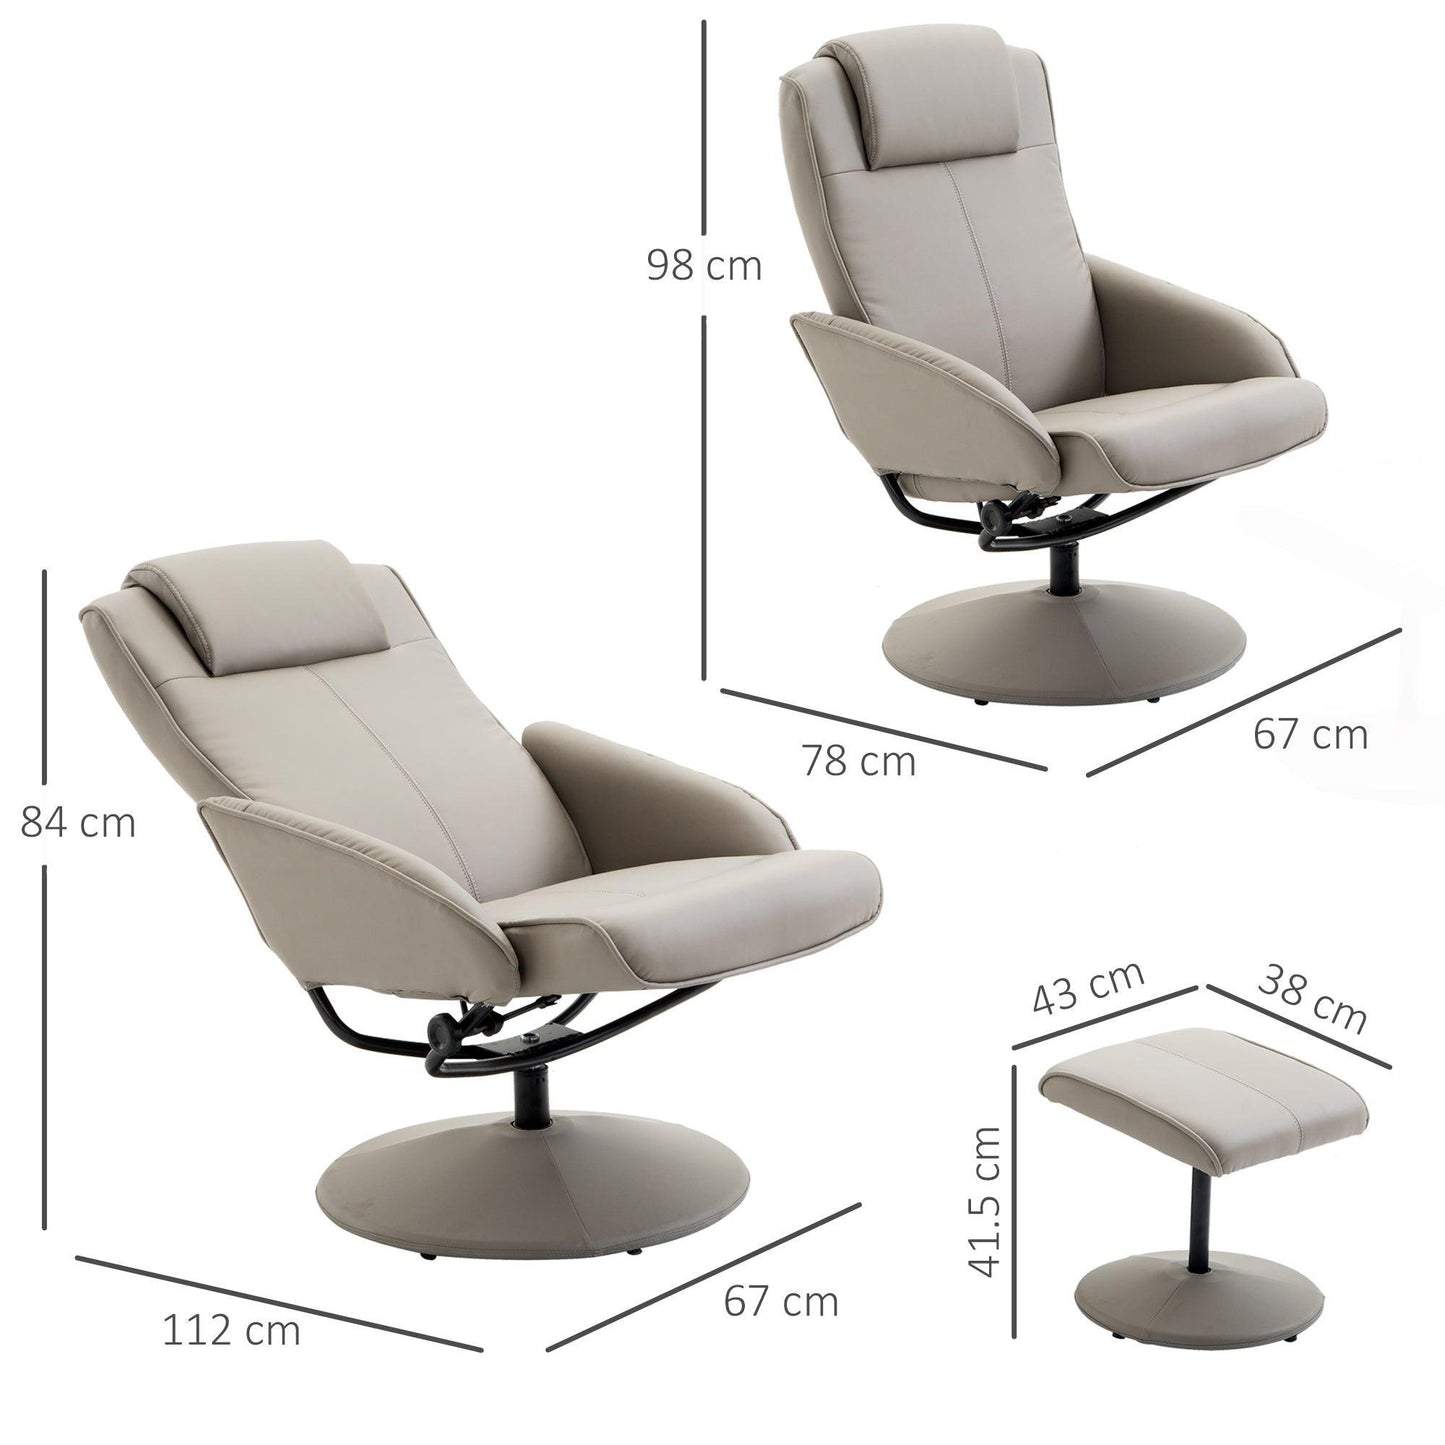 HOMCOM Adjustable Recliner Chair with Footrest - ALL4U RETAILER LTD